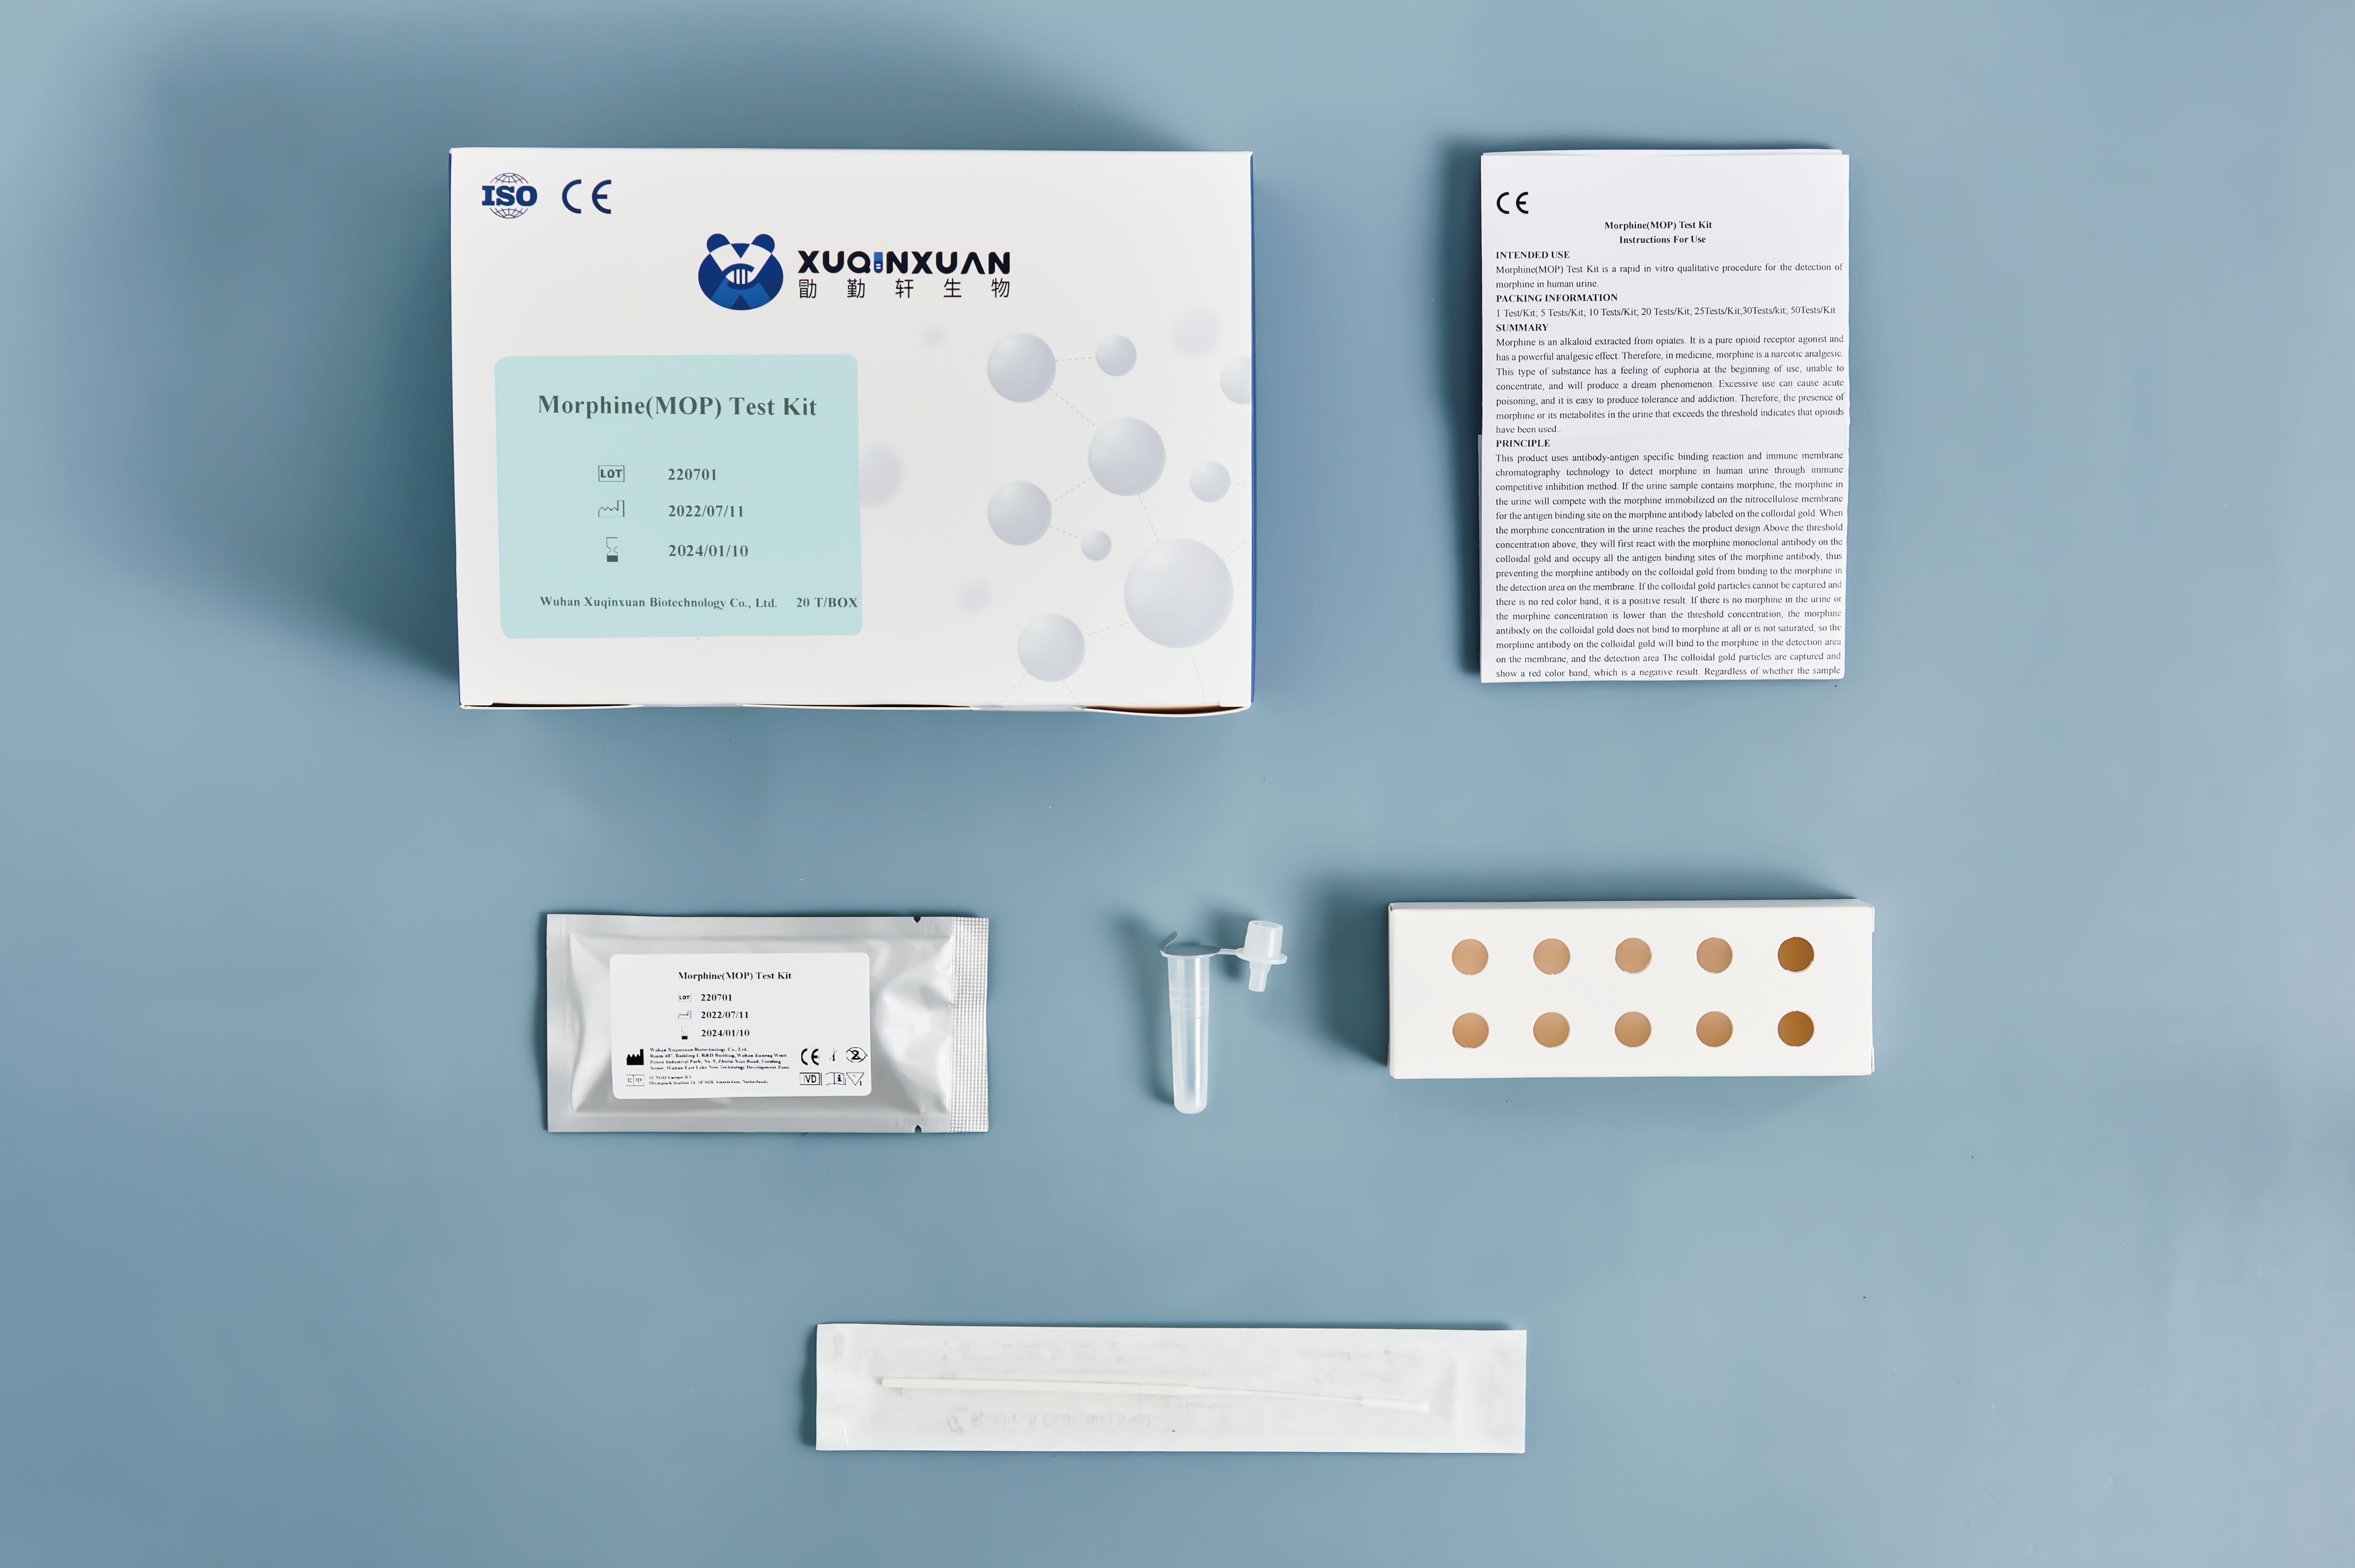 Morphine(MOP) Test Kit 